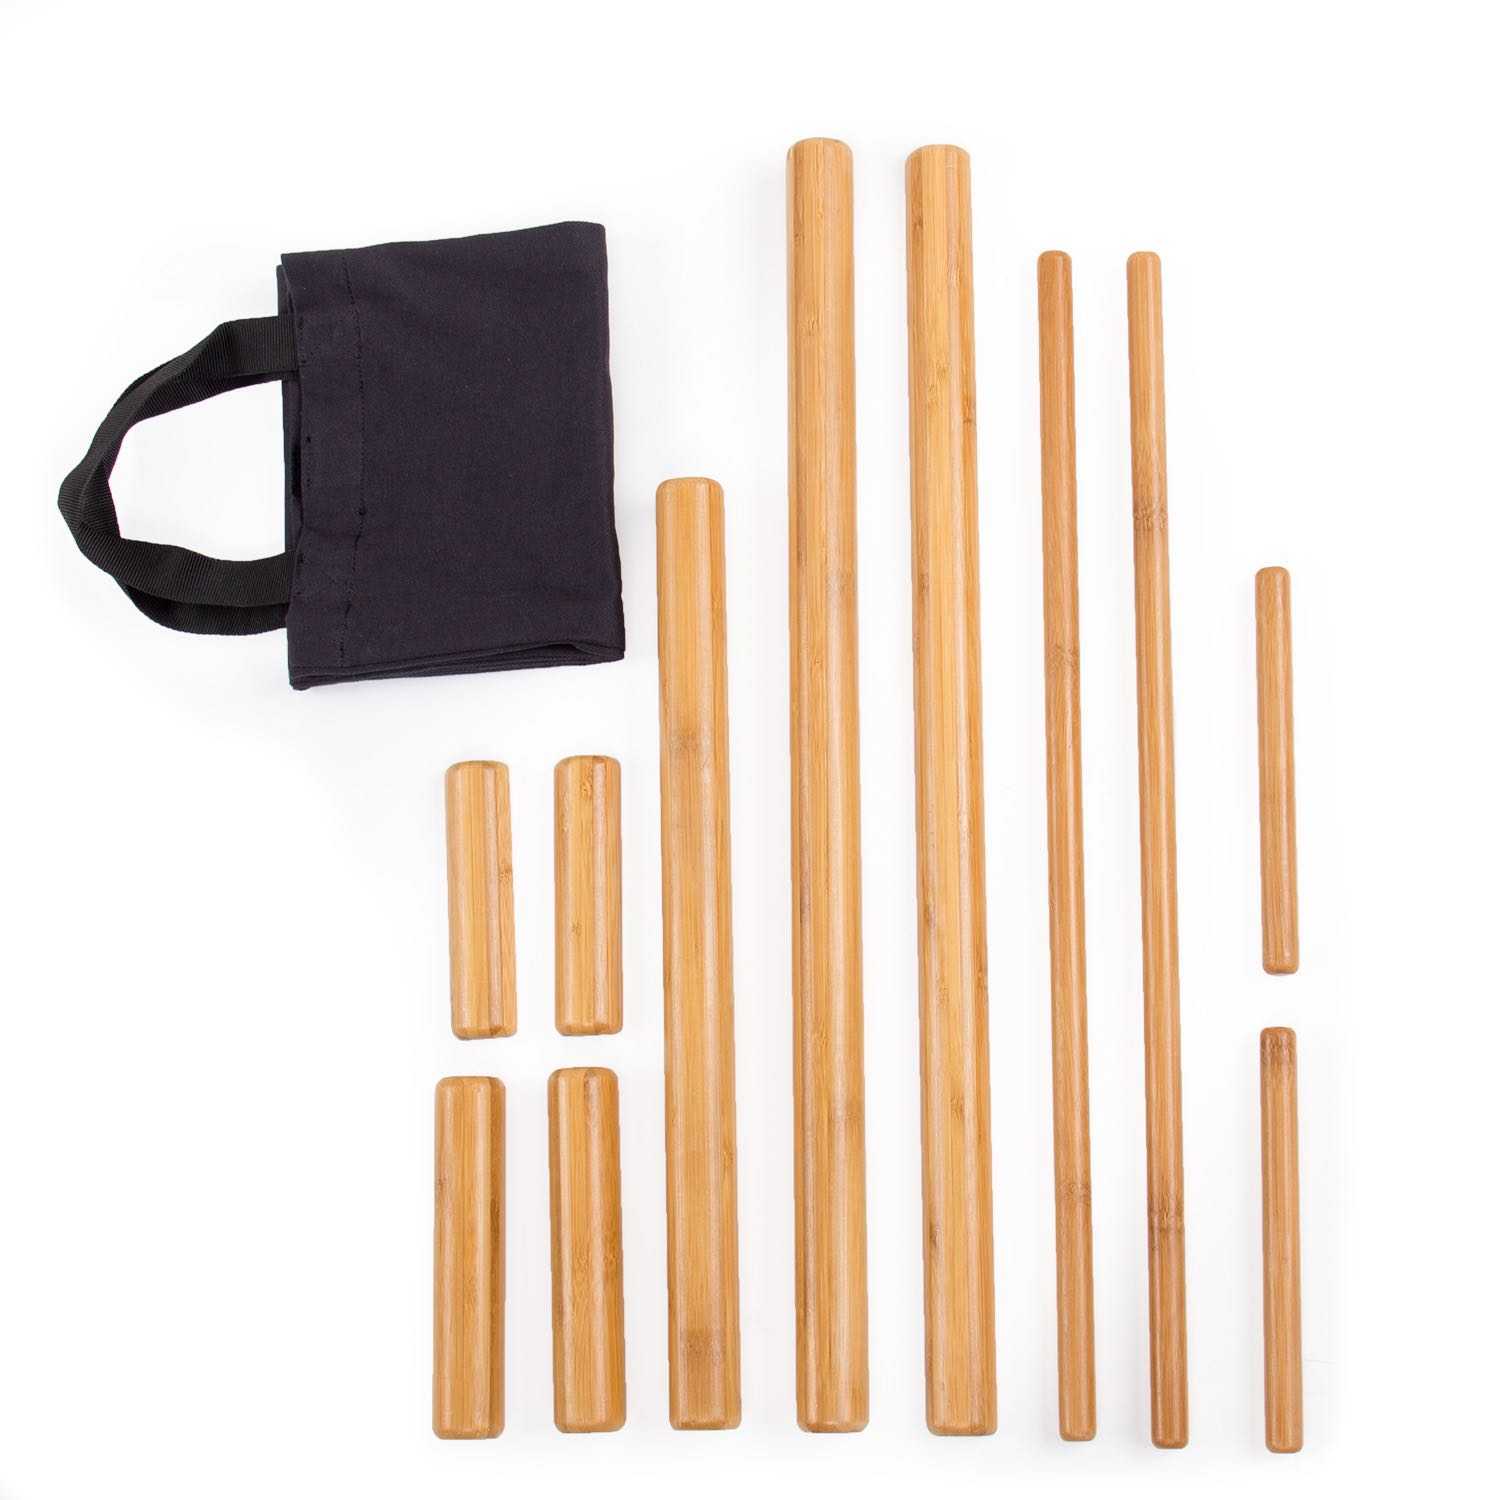 Массажный бамбуковый. Бамбуковые массажные палки. Массаж бамбуковыми палочками. Массажные палочки из бамбука. Набор бамбуковых палочек для массажа.